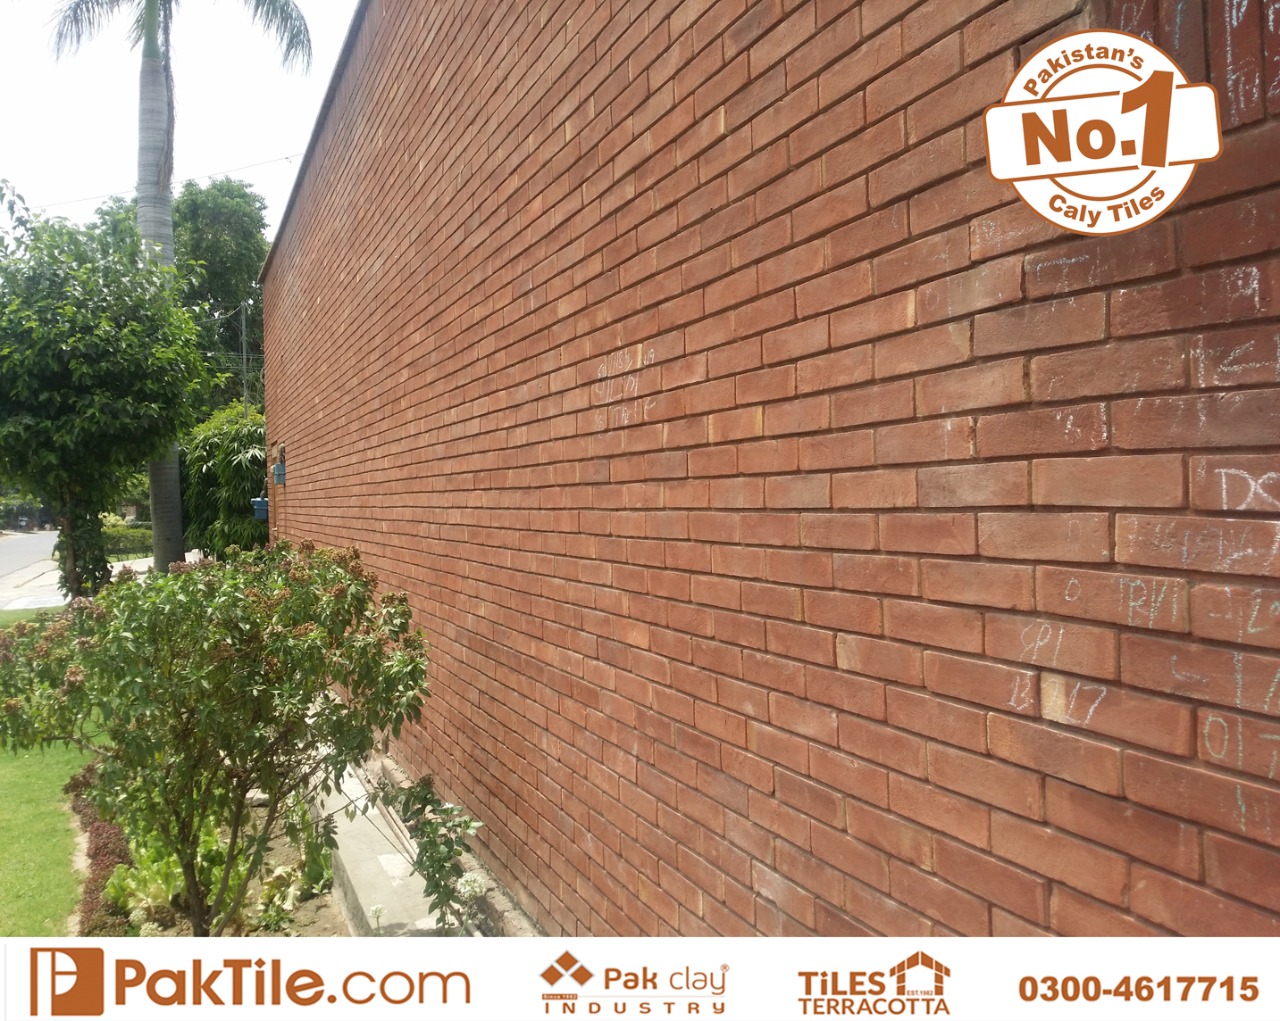 gutka bricks price in islamabad